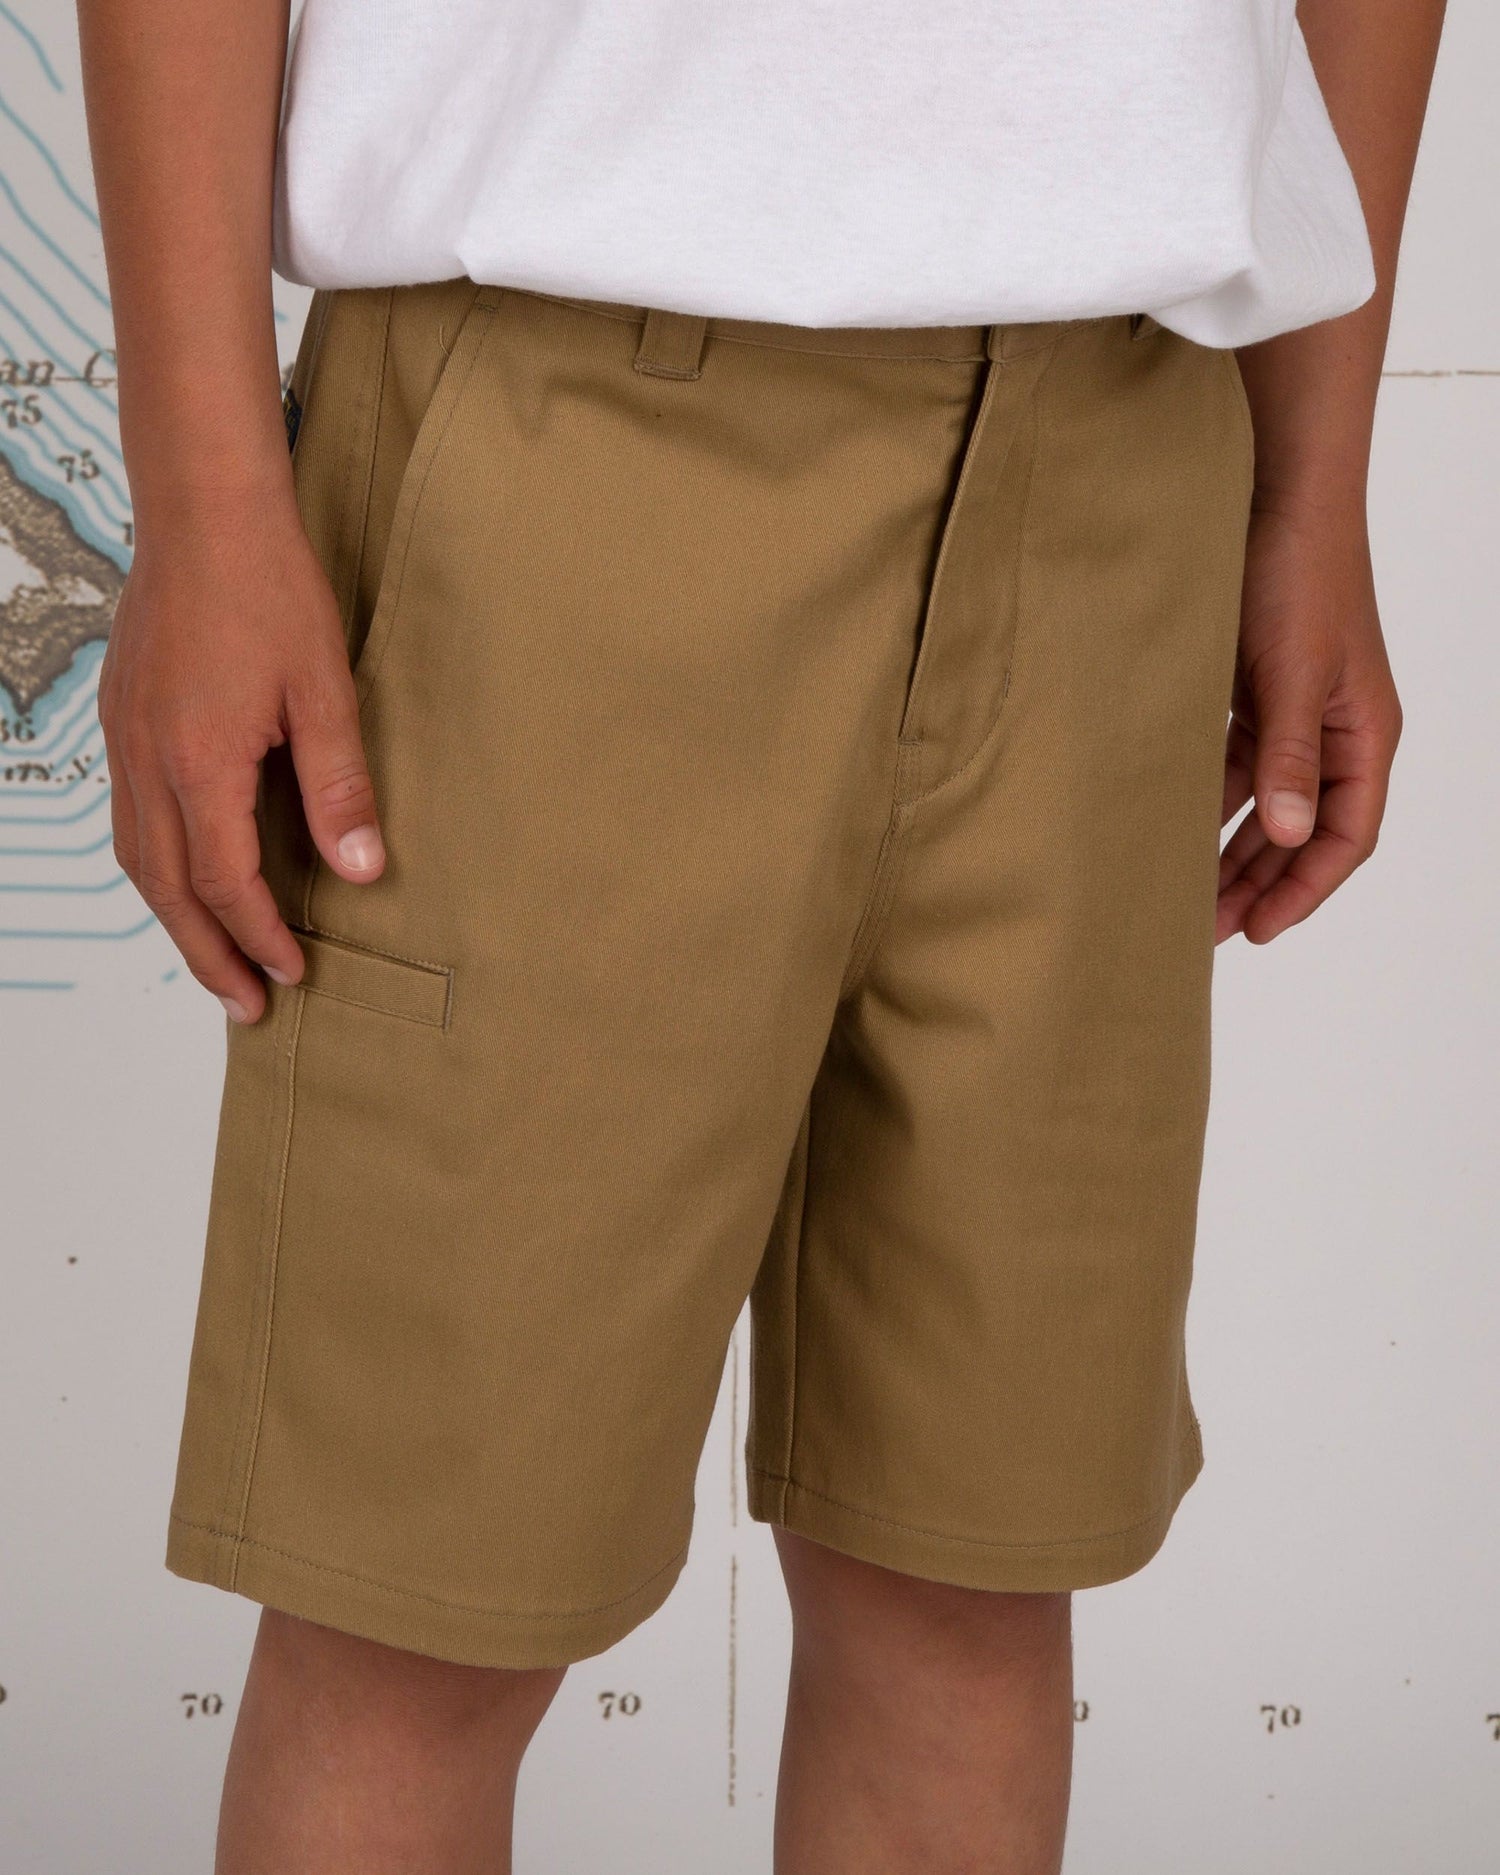 Deckhand Boys Workwear Brown Chino Short